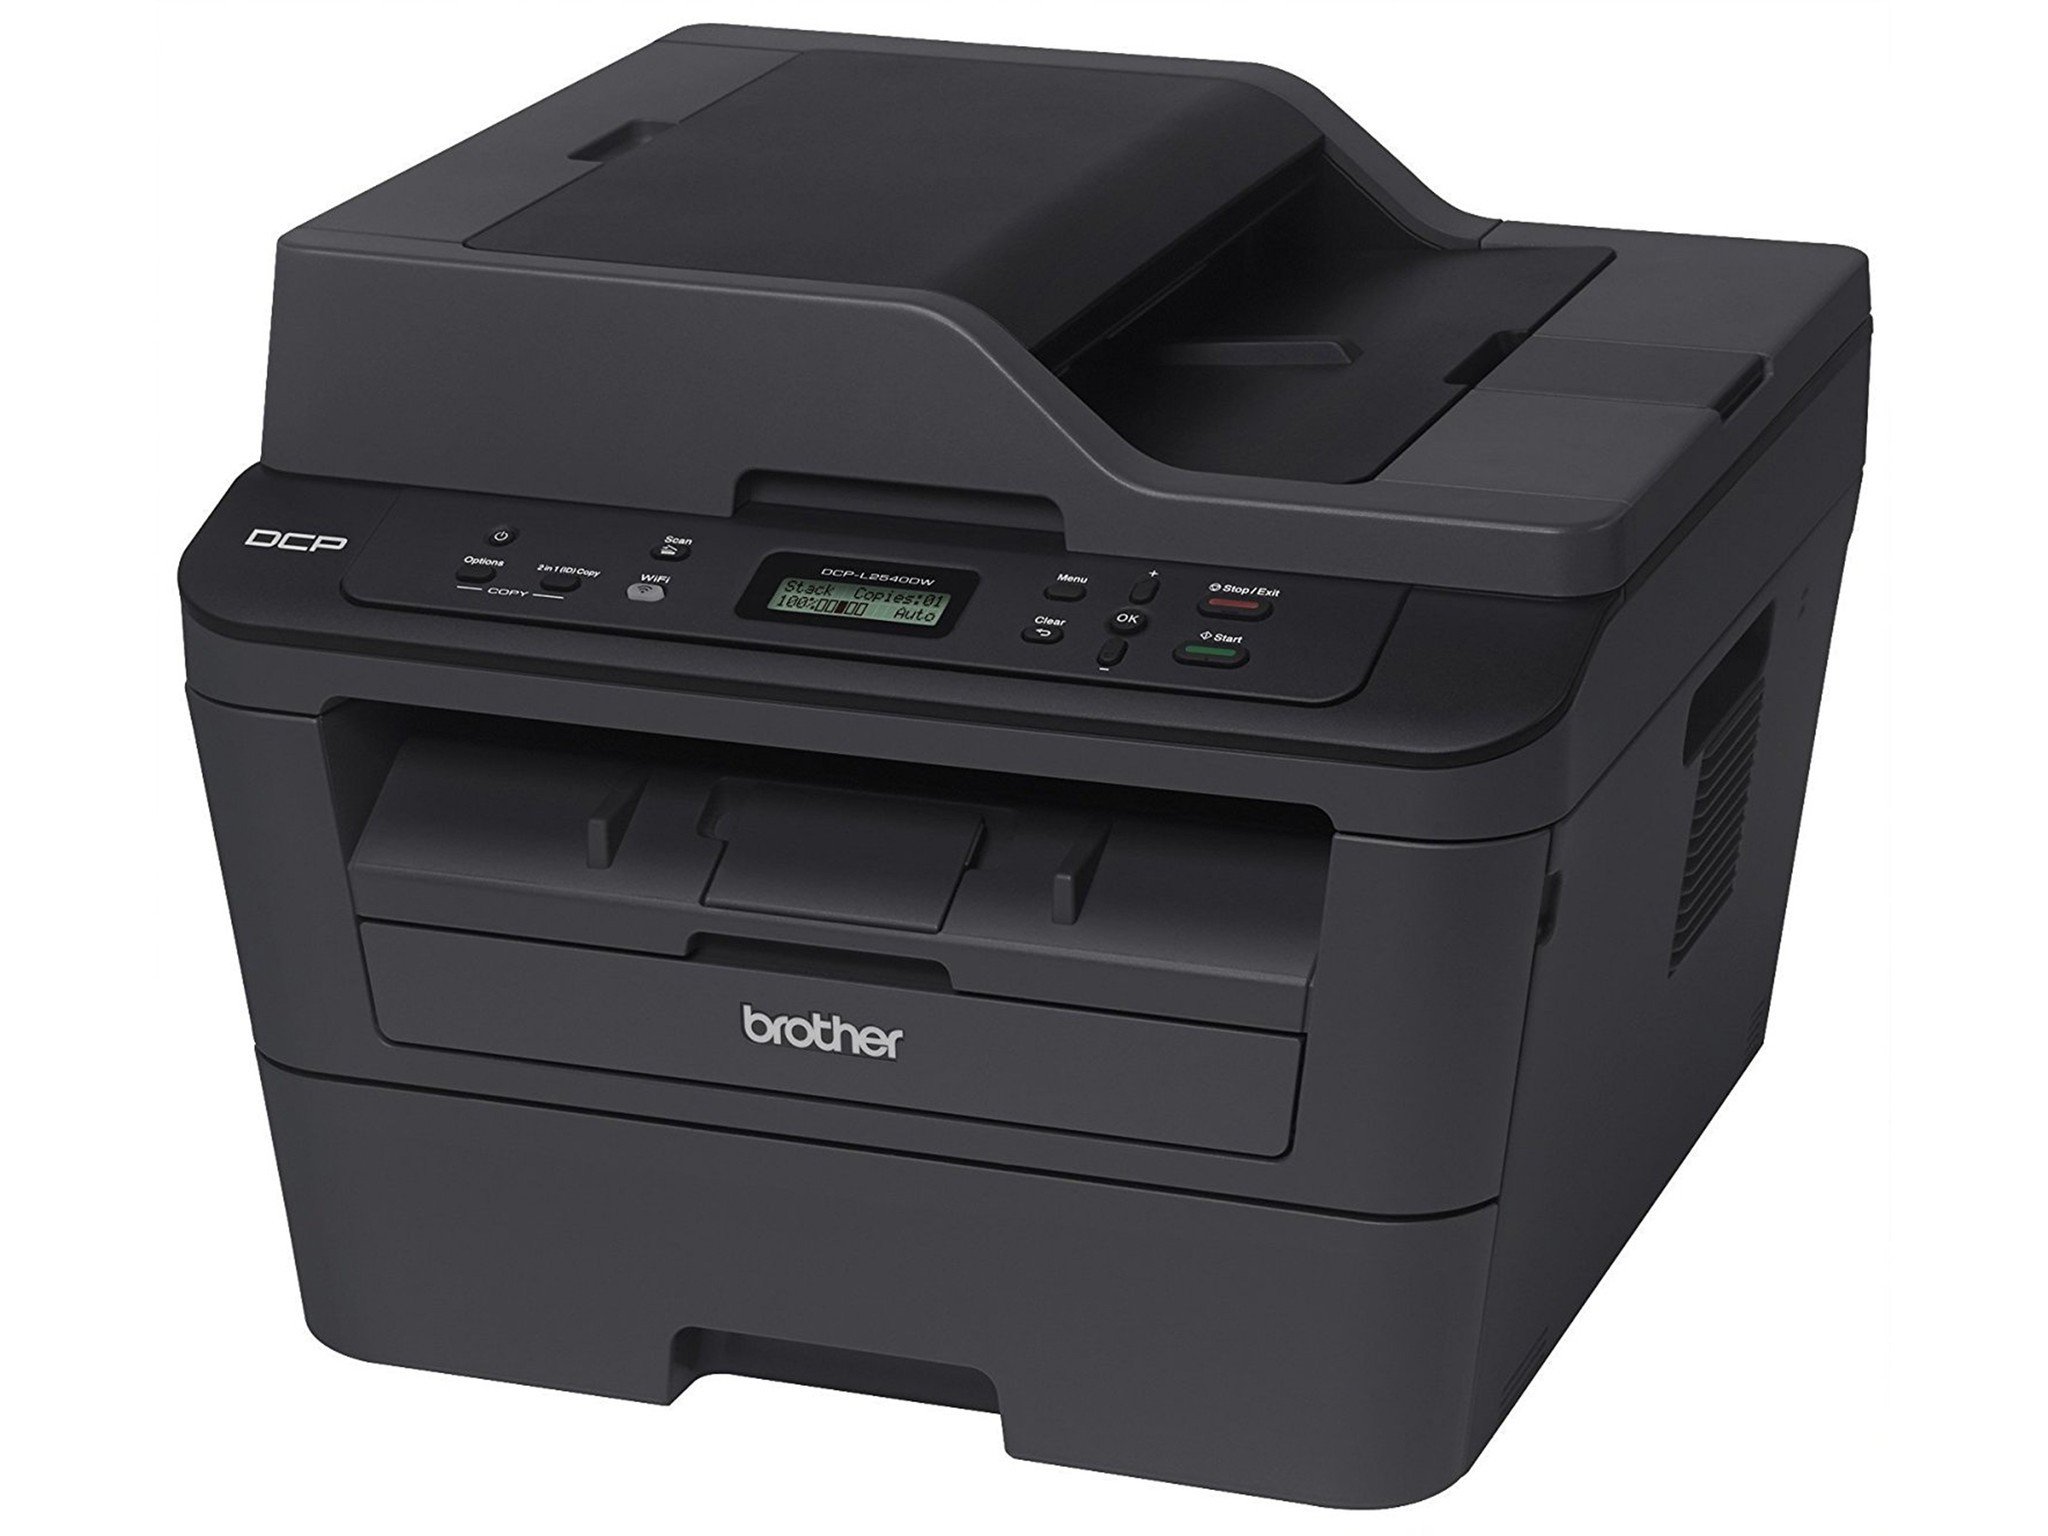 brother-printer-copier-scanner.jpg